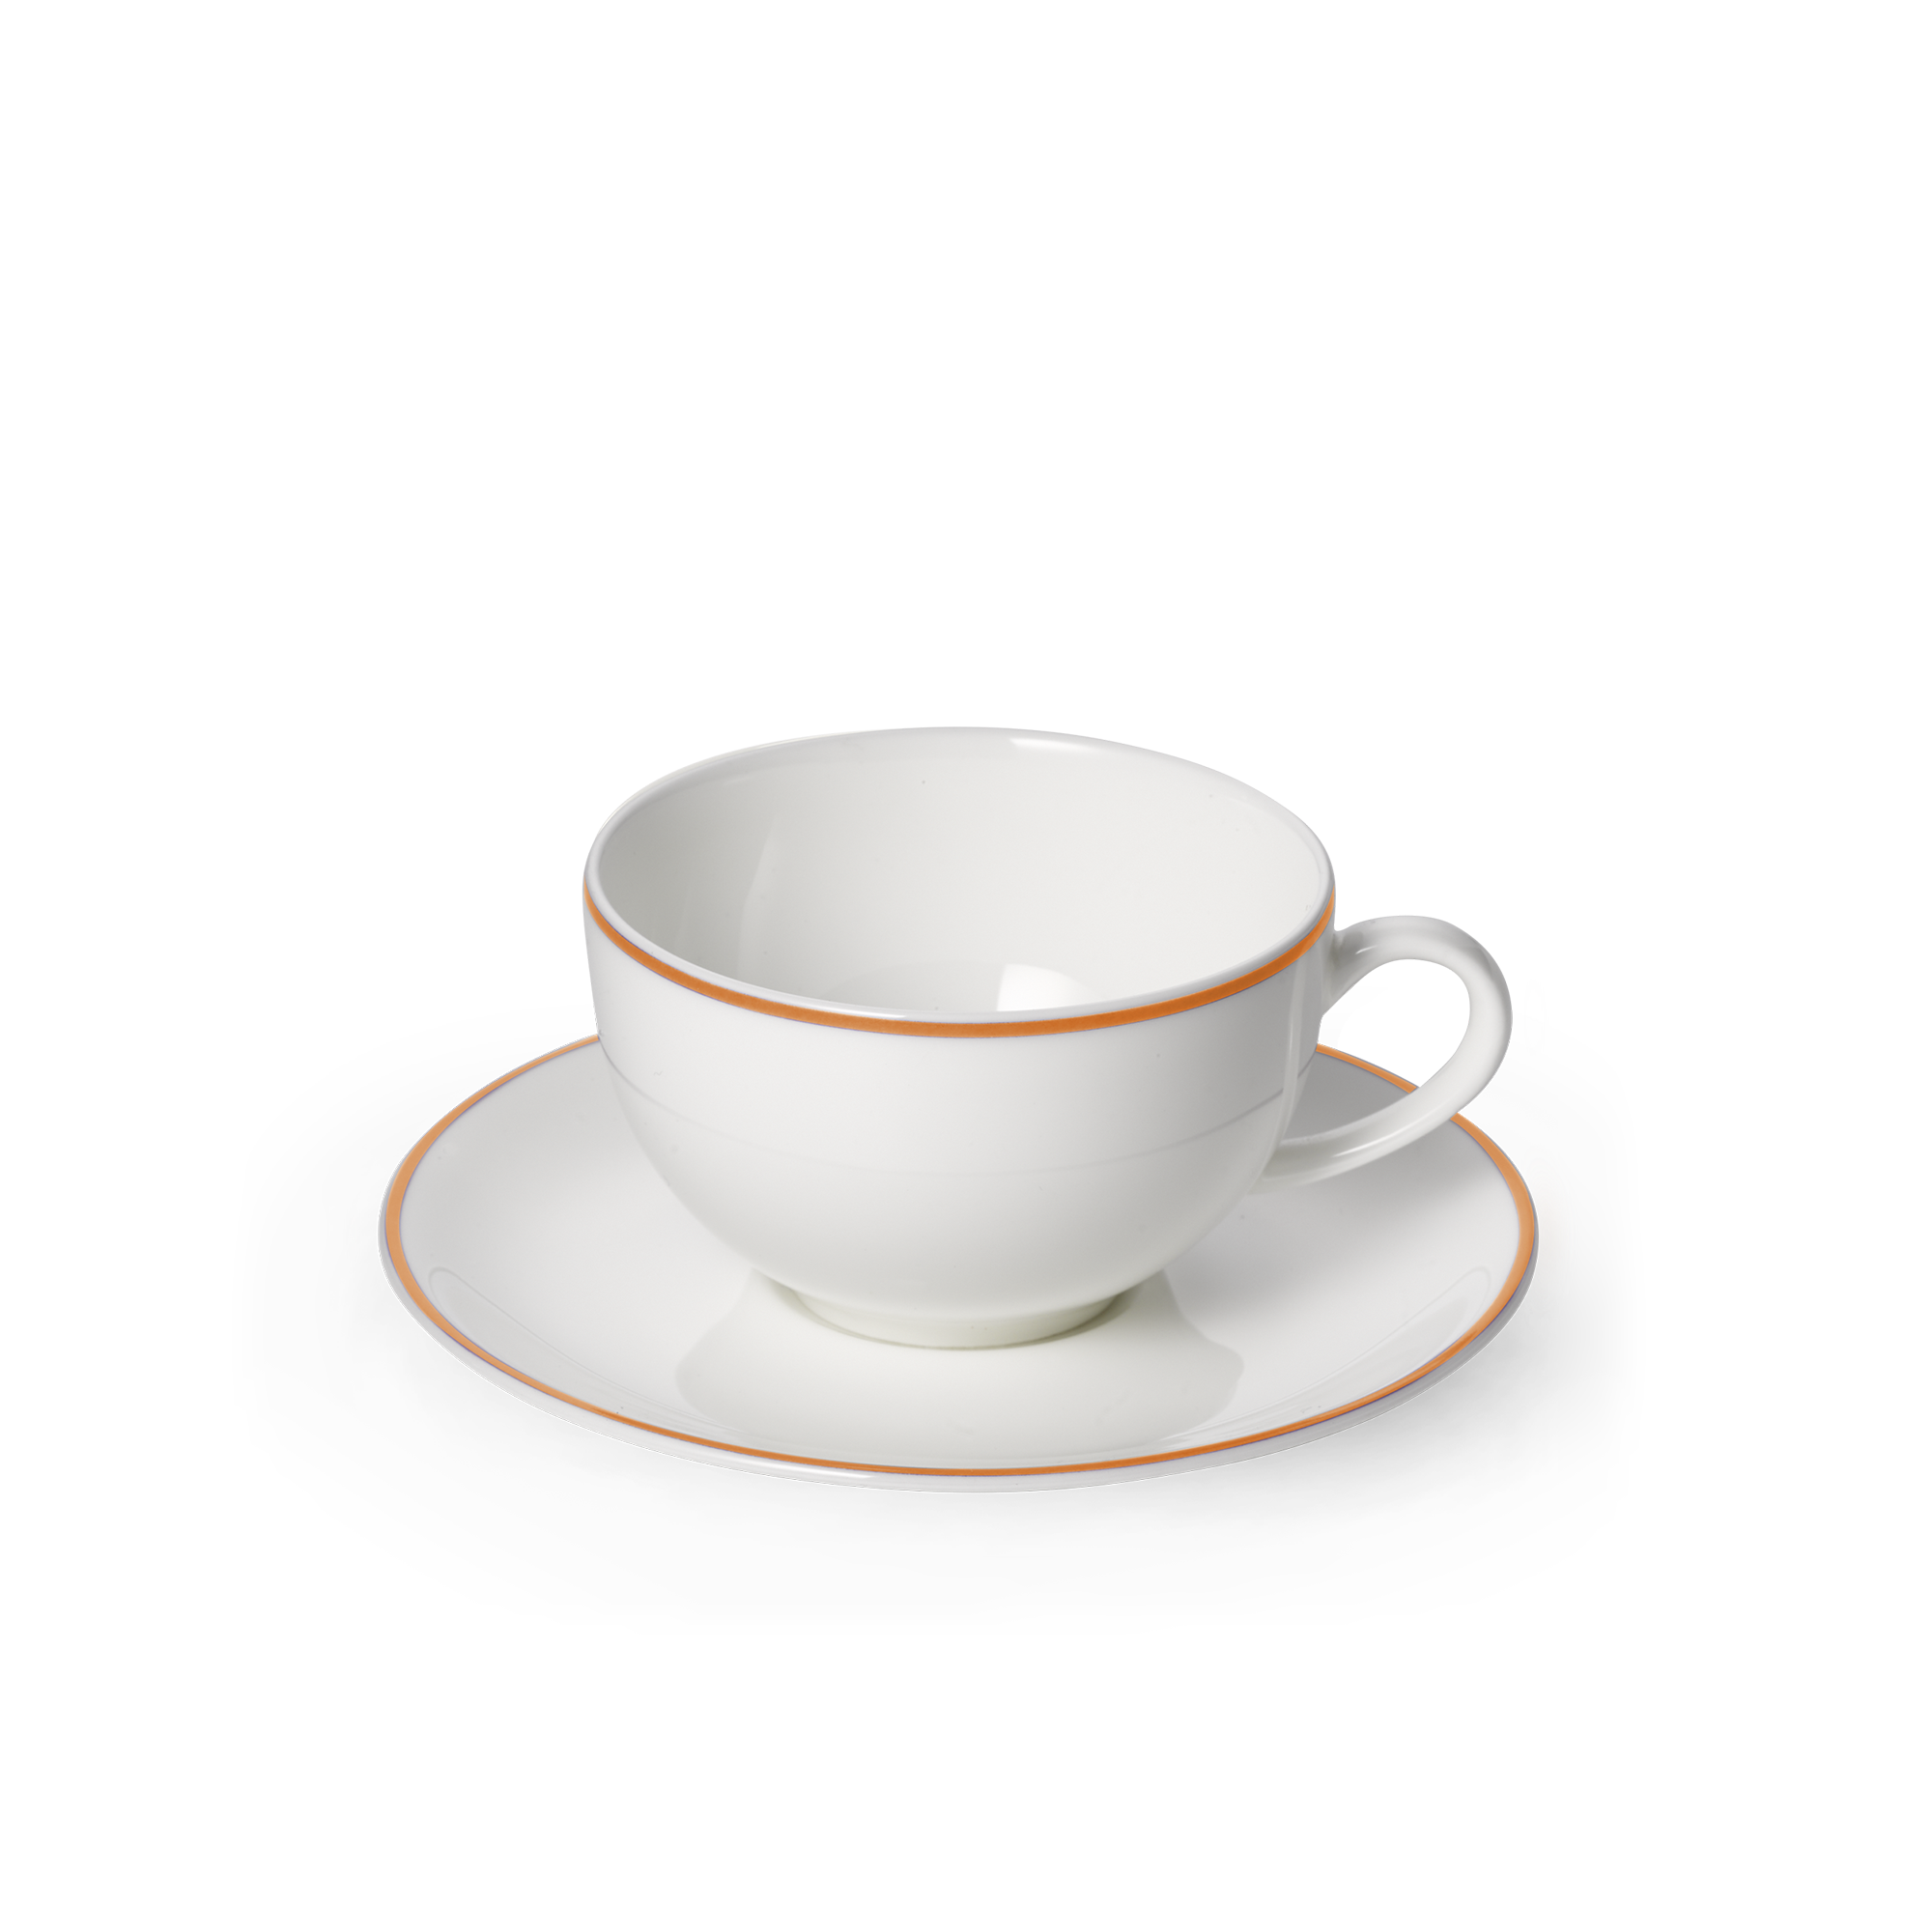 Simplicity Orange coffee mug